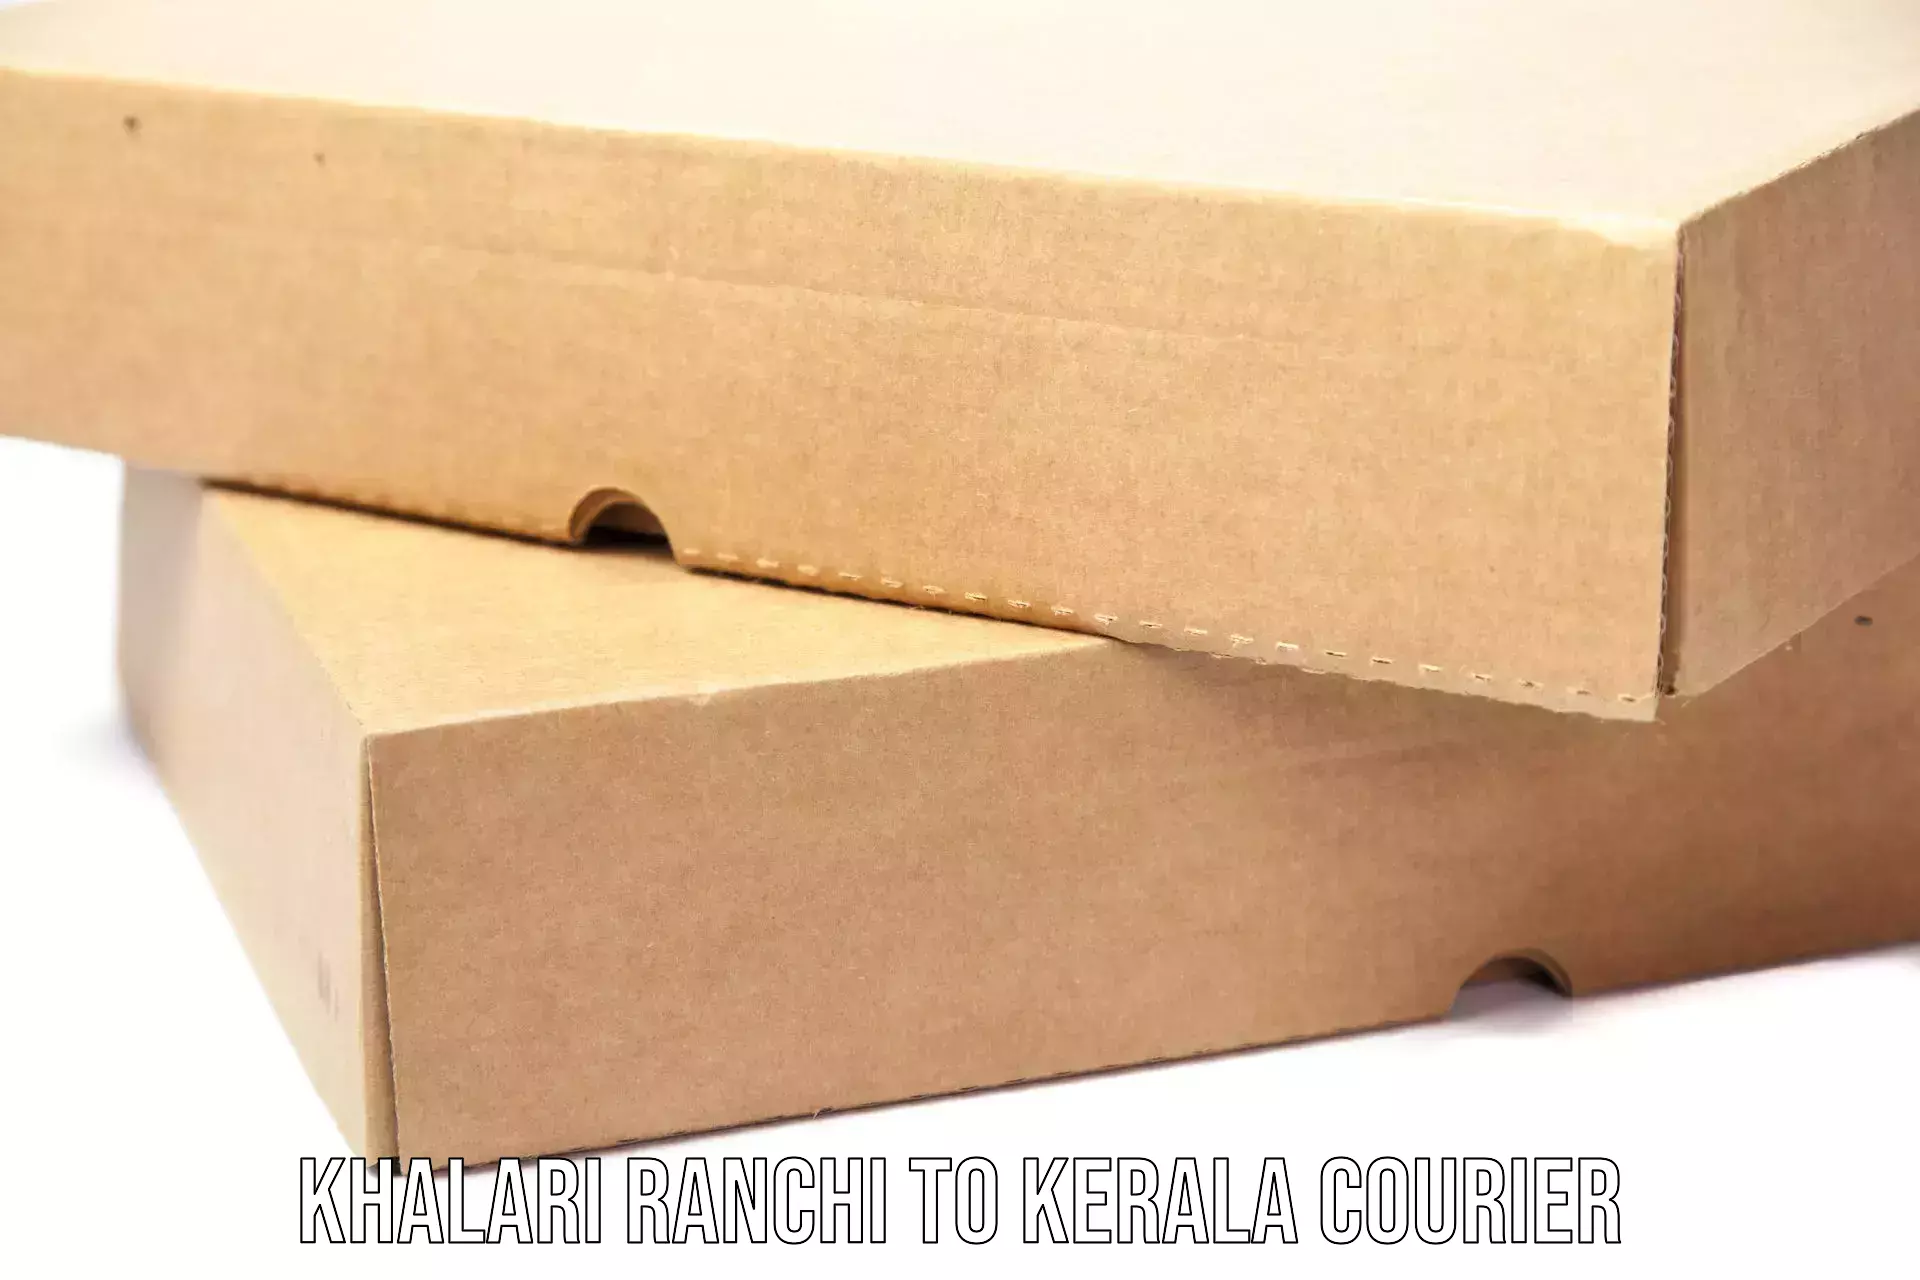 Business delivery service Khalari Ranchi to Thodupuzha